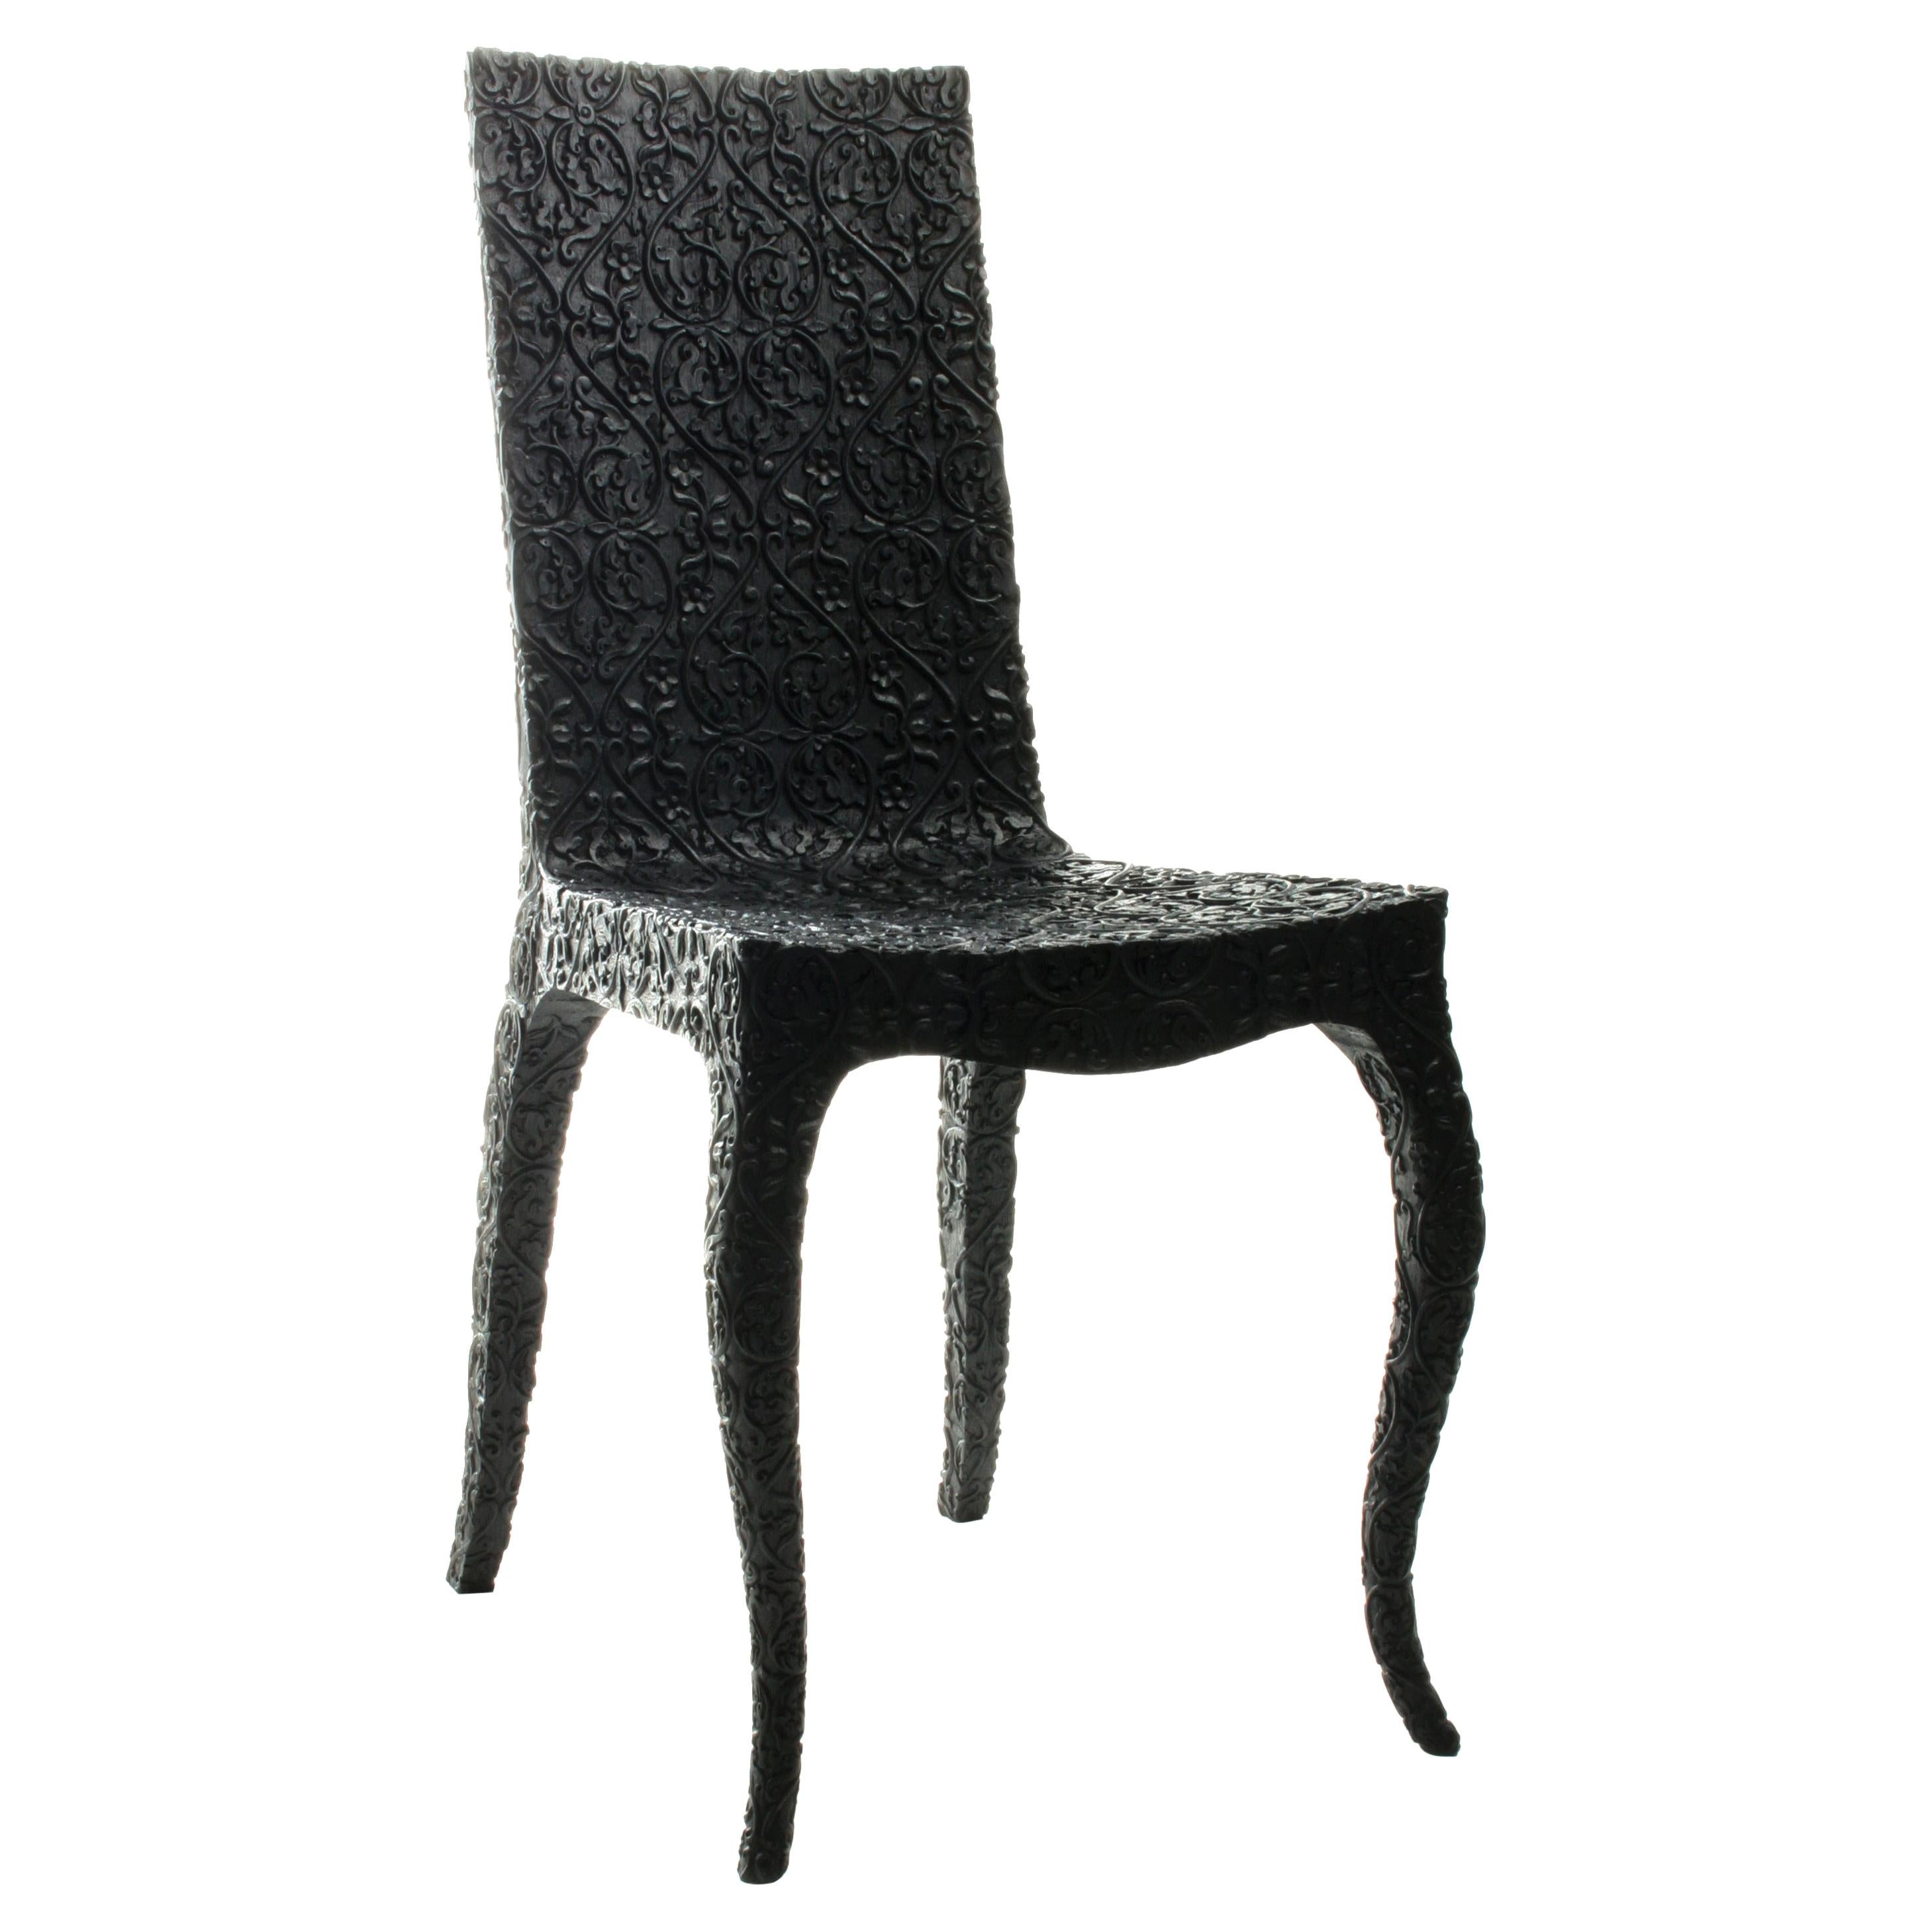 Geschnitzter Stuhl, von Marcel Wanders, handgeschnitzter Stuhl, 2008, schwarz, limitiert